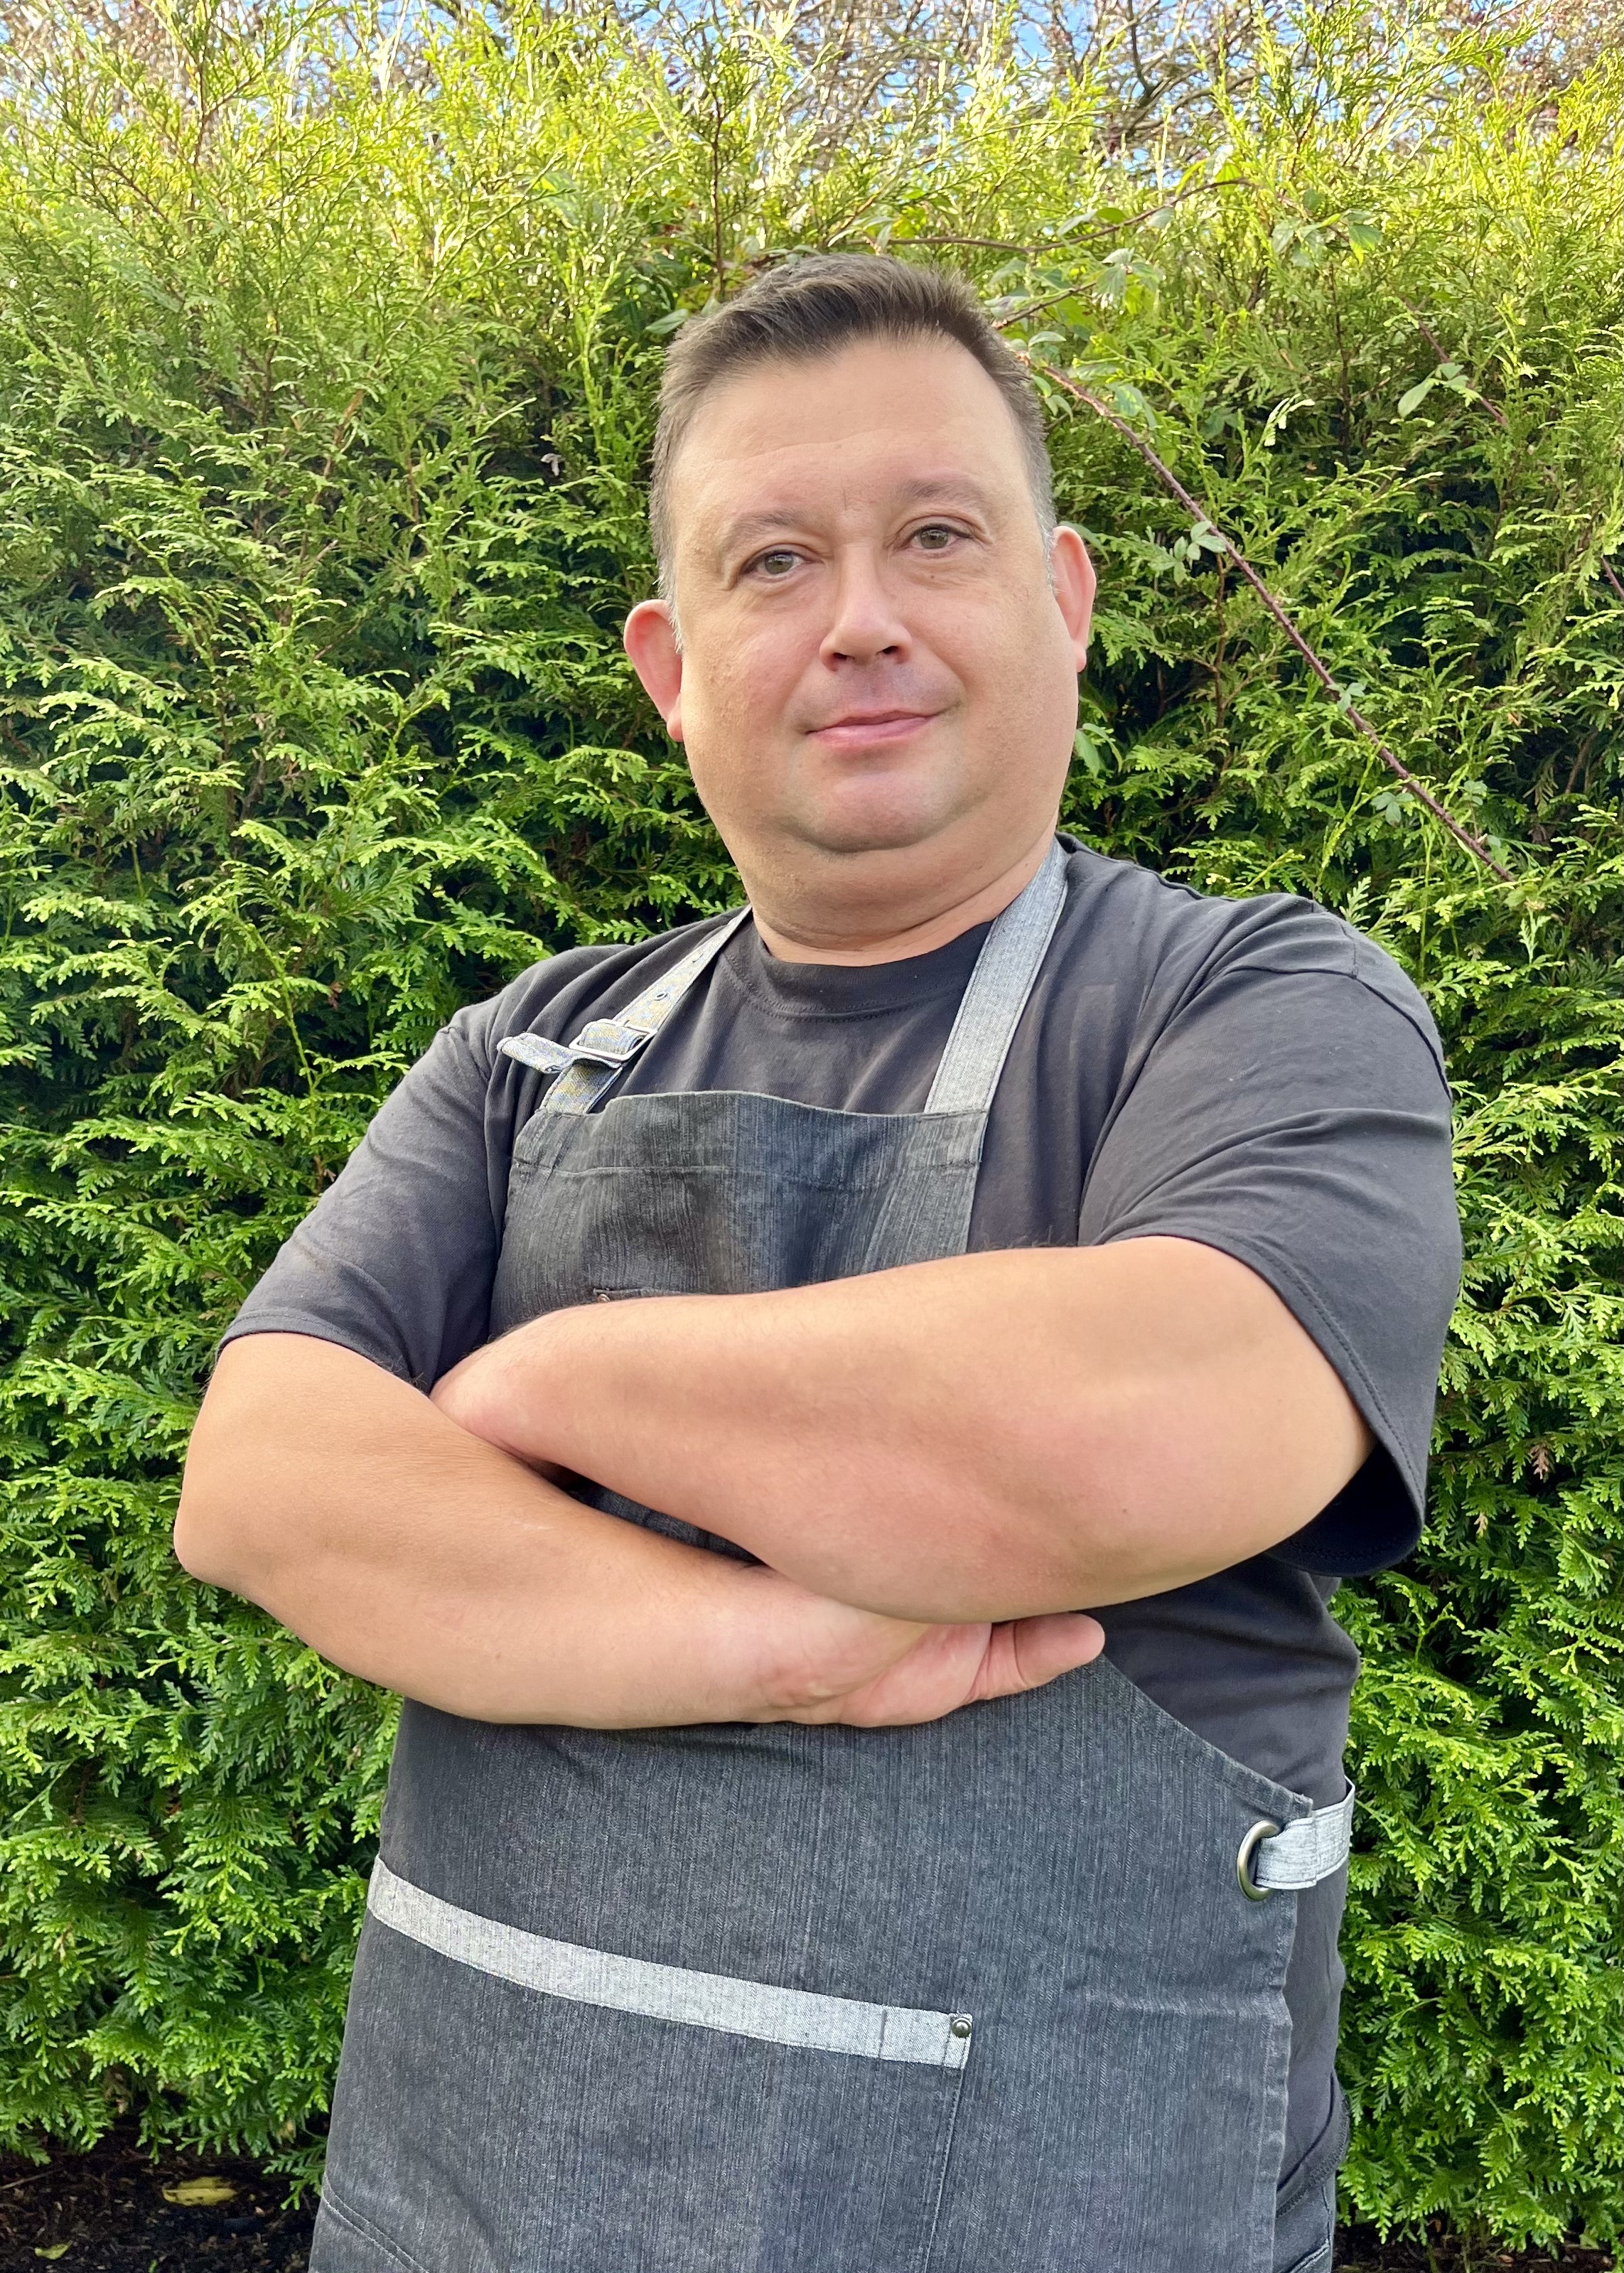 Wiktor Barczynski, head chef at The Cross Keys.